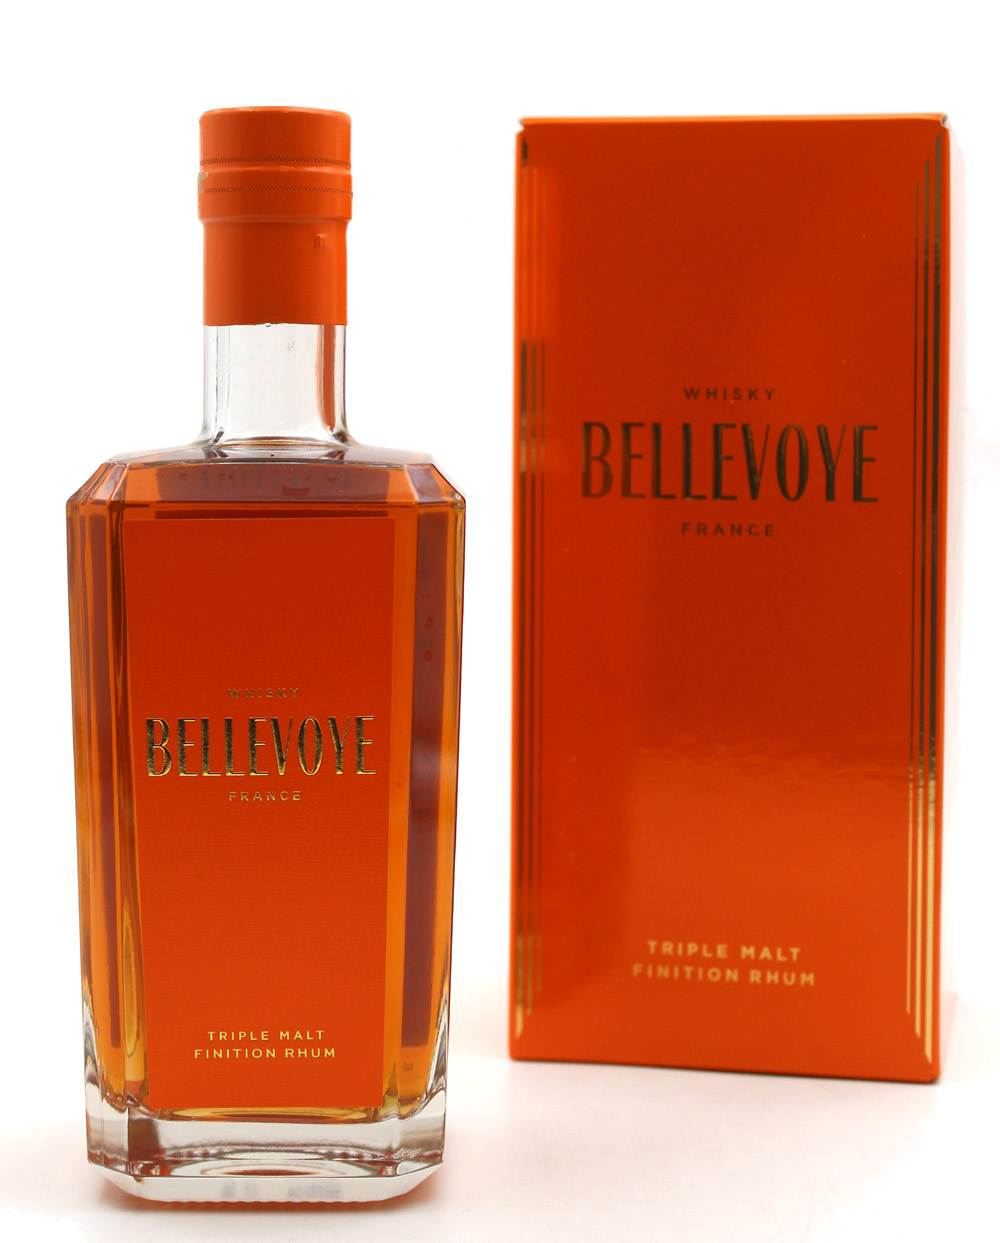 Bellevoye Orange Whisky finition Rhum - 70cl